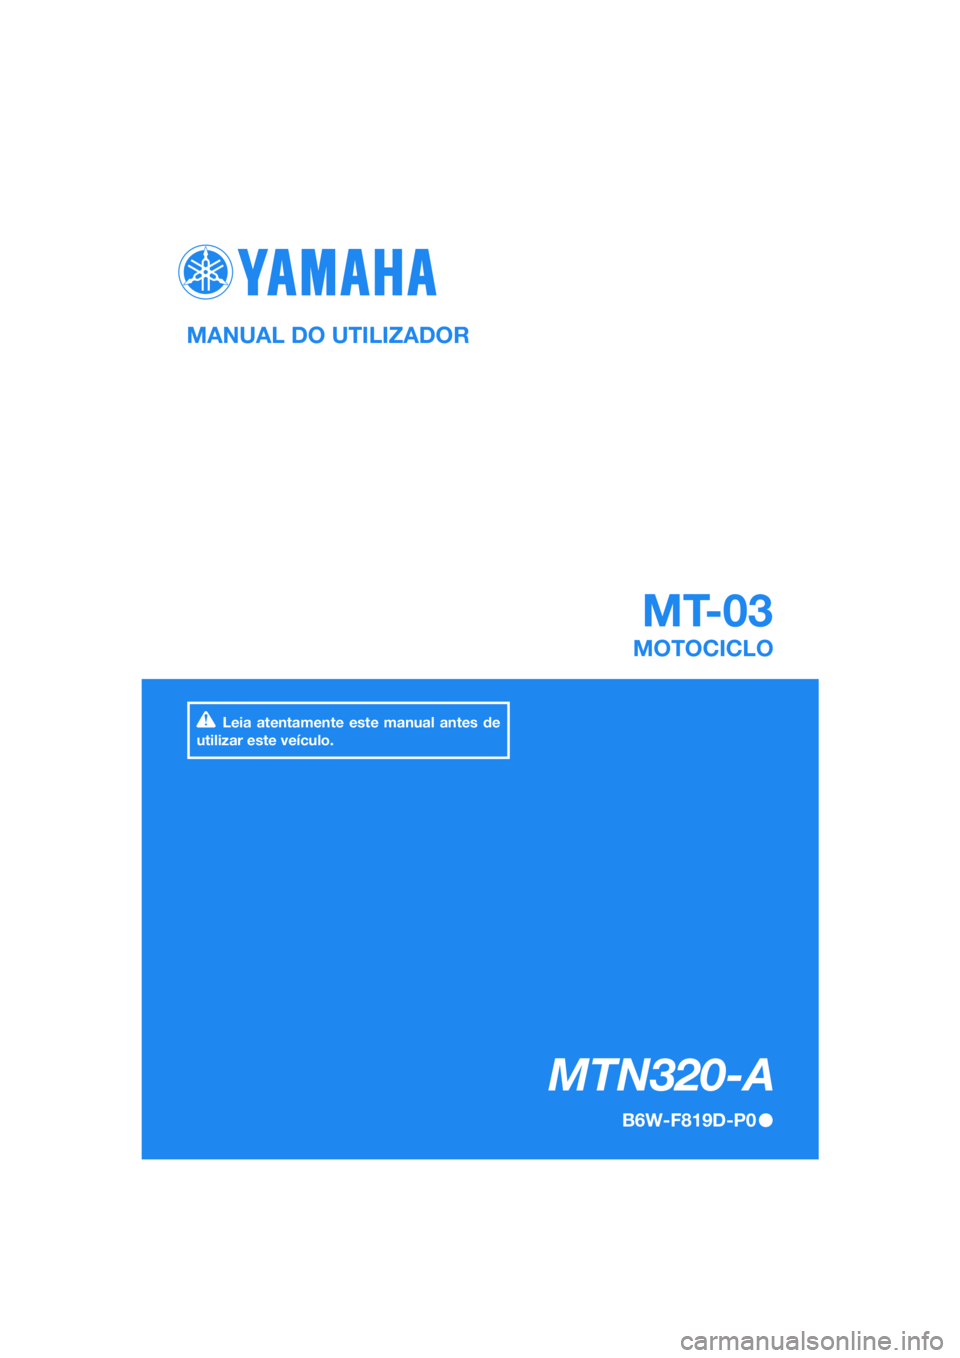 YAMAHA MT-03 2020  Manual de utilização (in Portuguese) DIC183
 MT-03
   MTN320-A
MANUAL DO UTILIZADOR
B6W-F819D-P0
MOTOCICLO
Leia atentamente este manual antes de 
utilizar este veículo.
[Portuguese  (P)] 